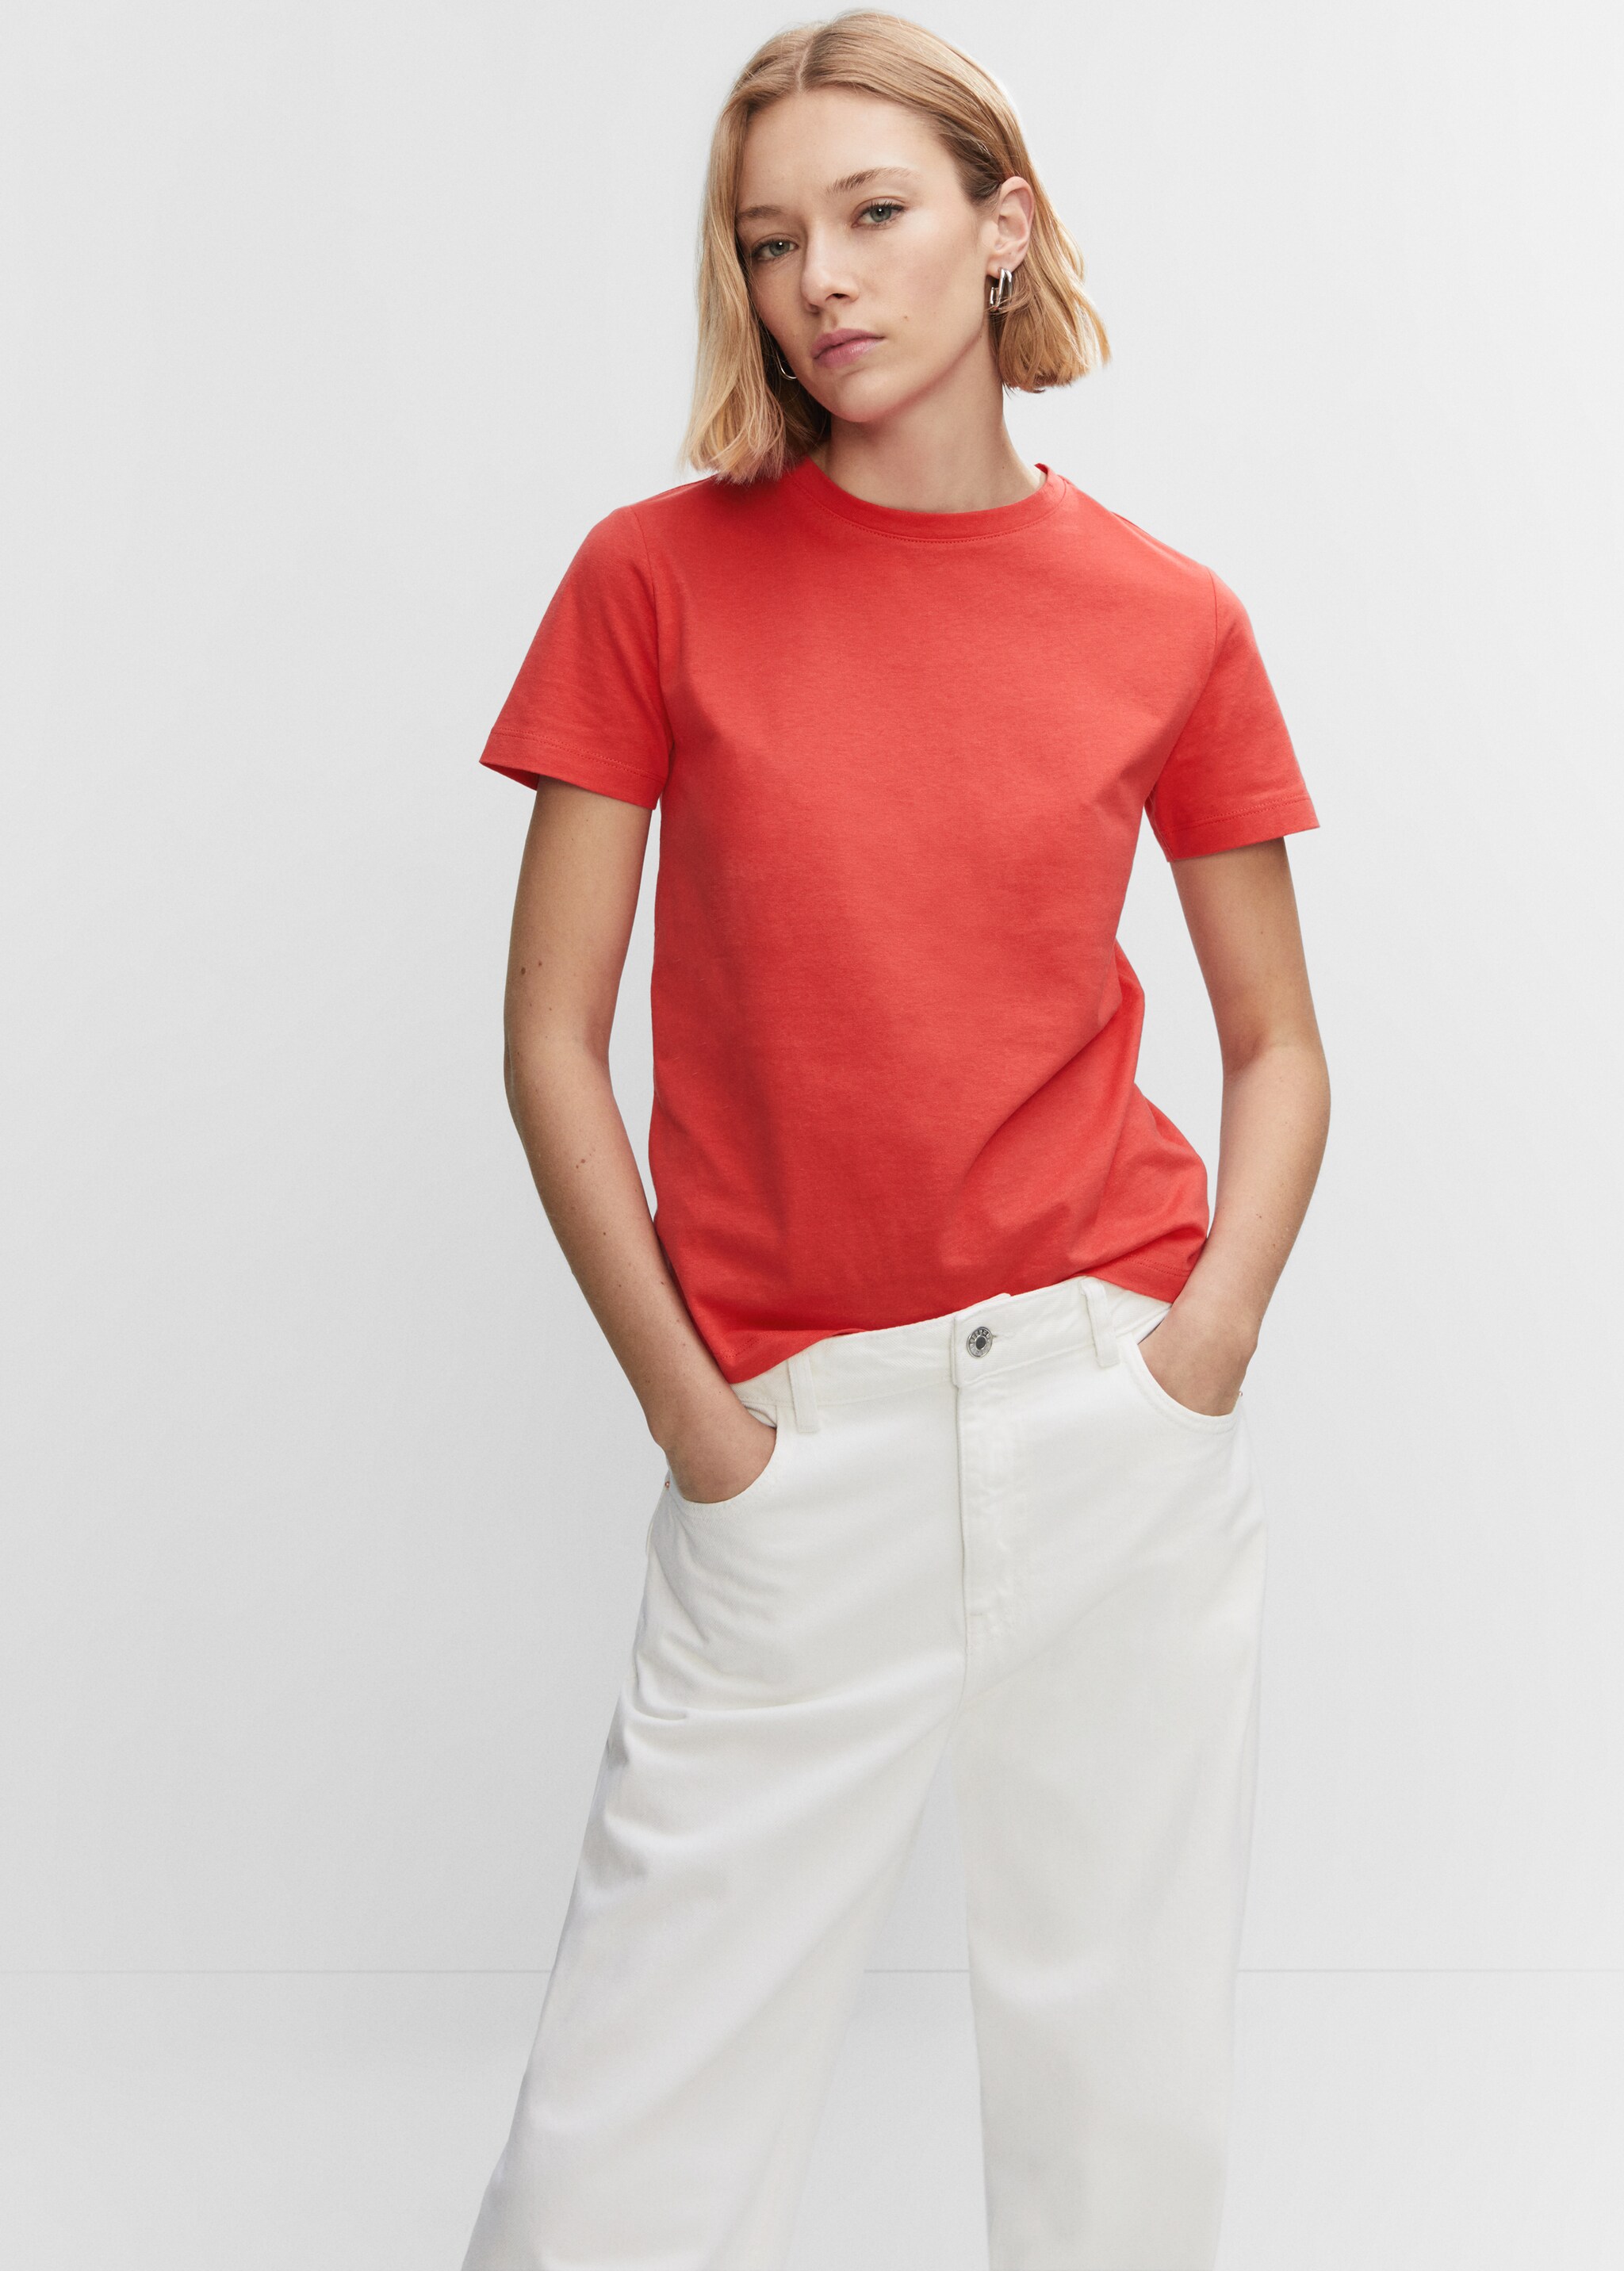 Camiseta 100% algodón  - Plano medio